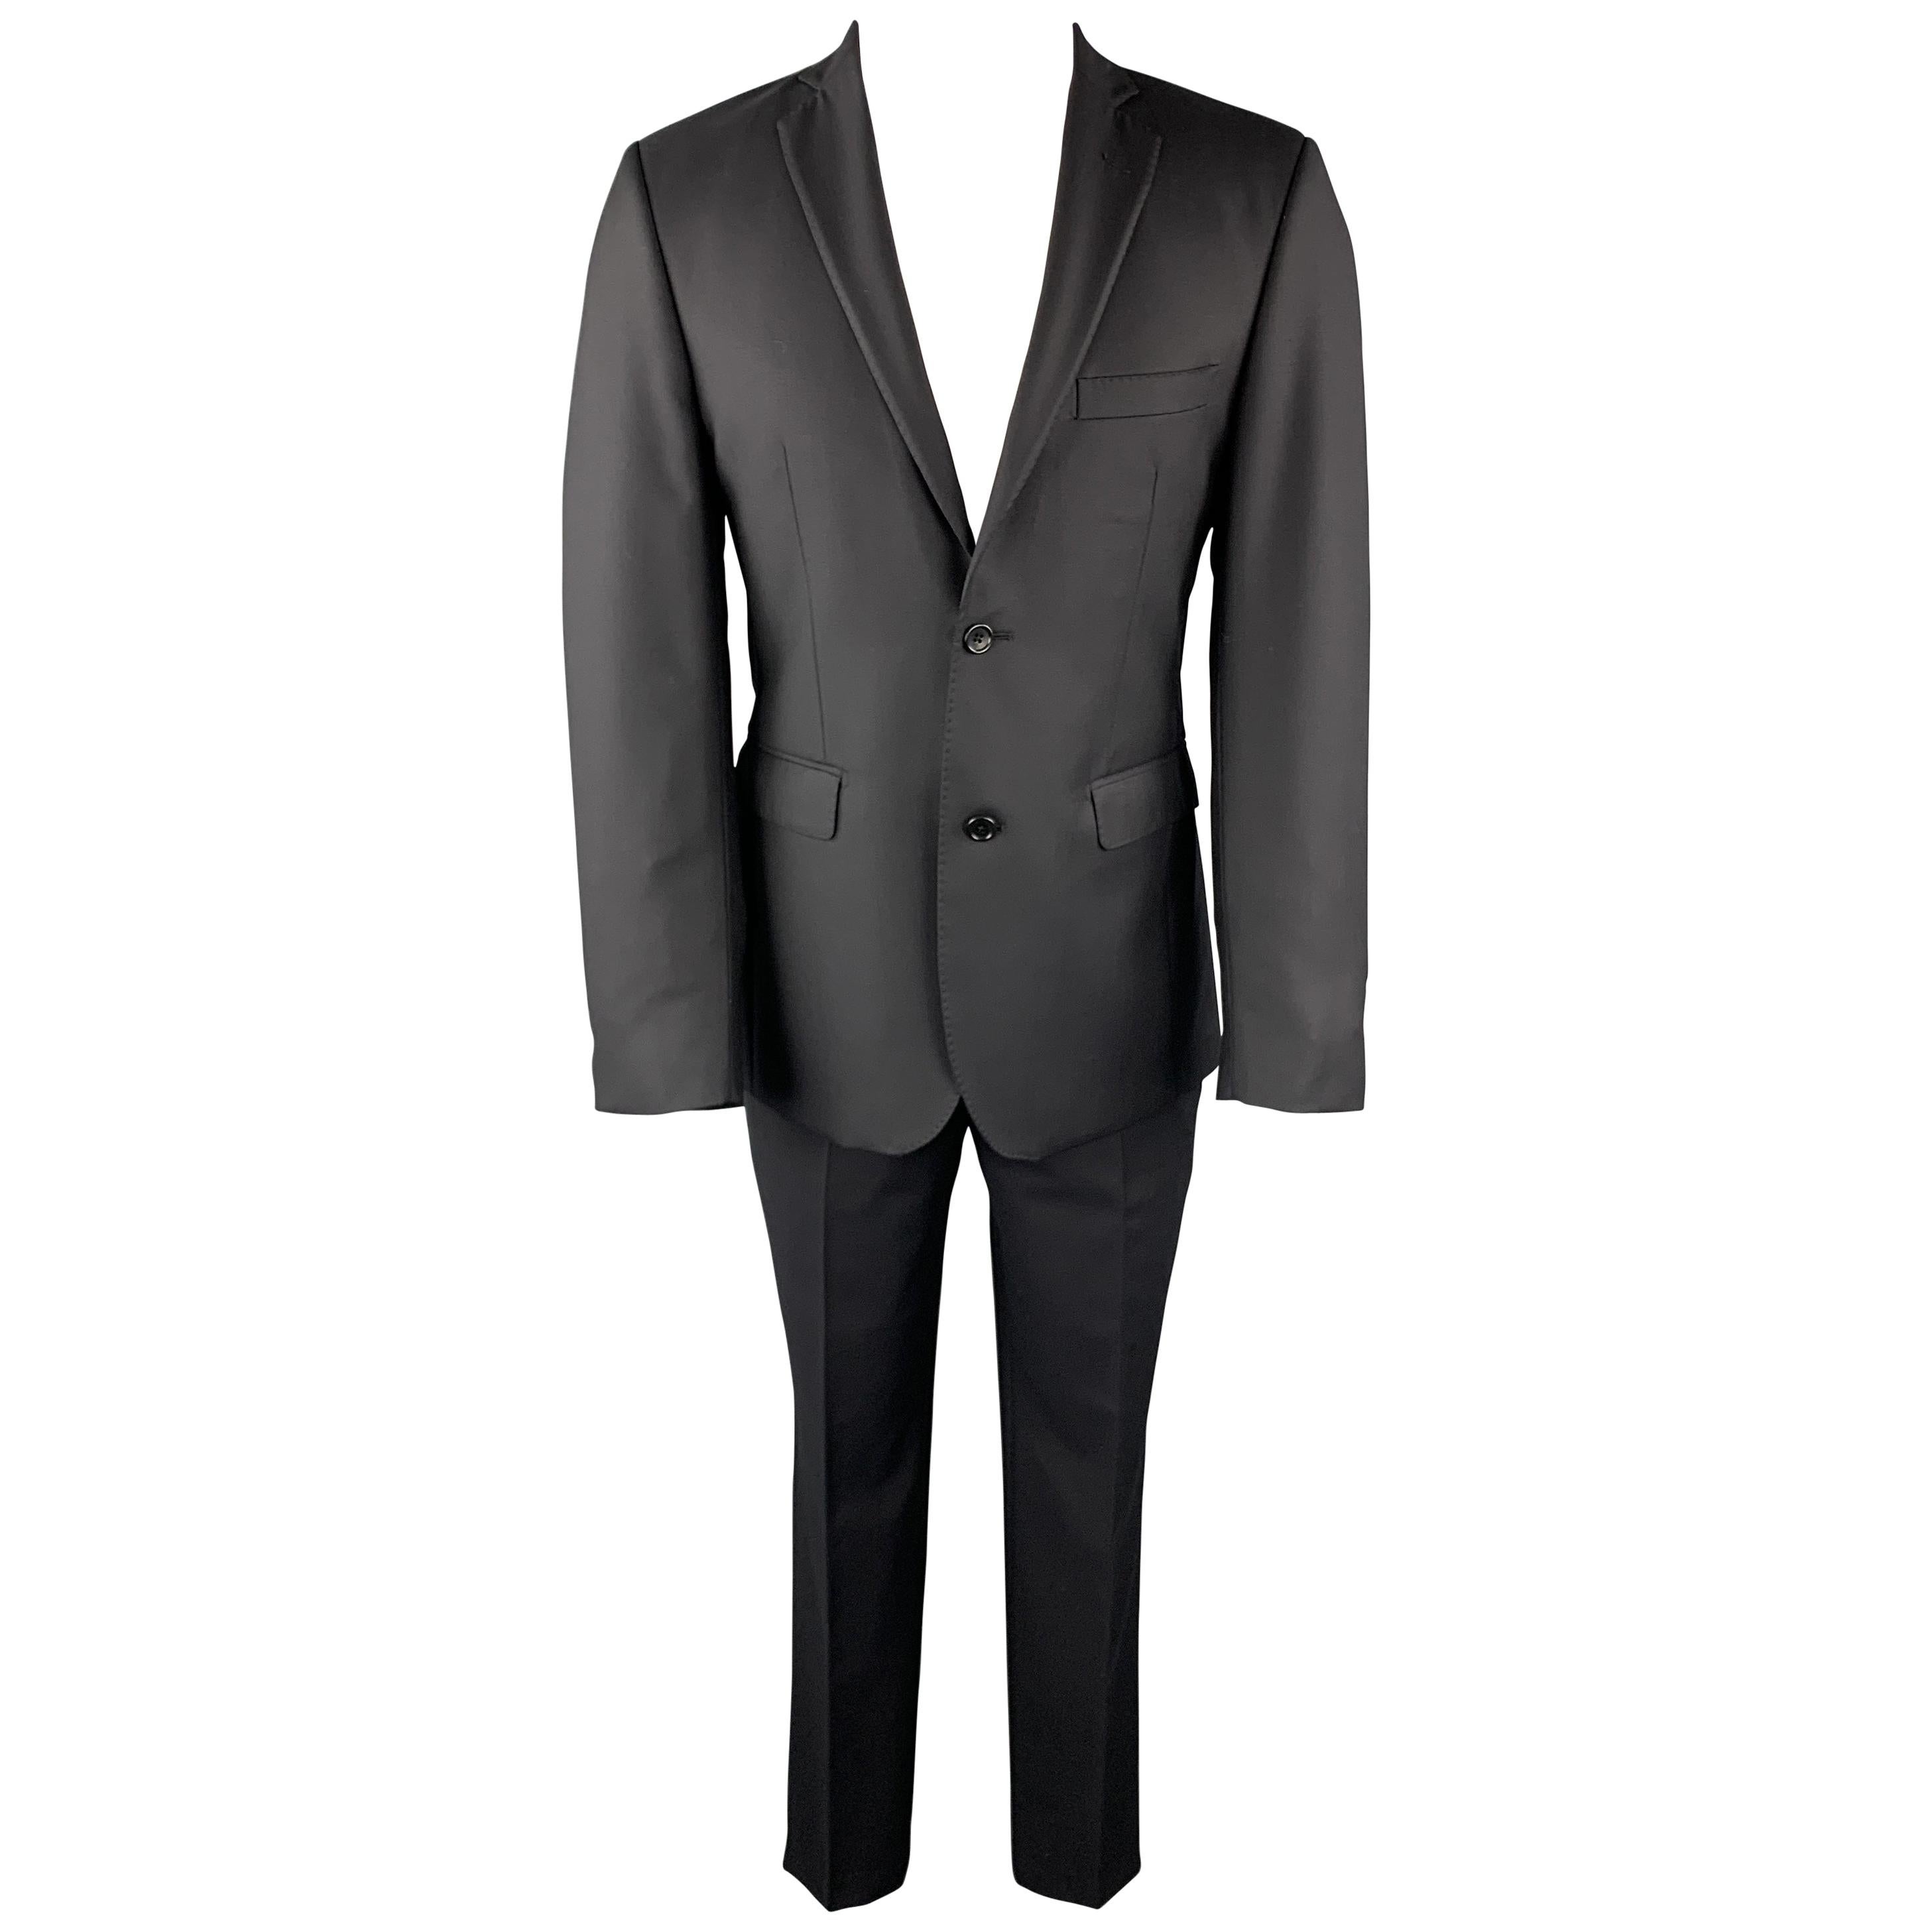 SAKS FIFTH AVENUE Size 38 Black Textured Wool Notch Lapel Suit